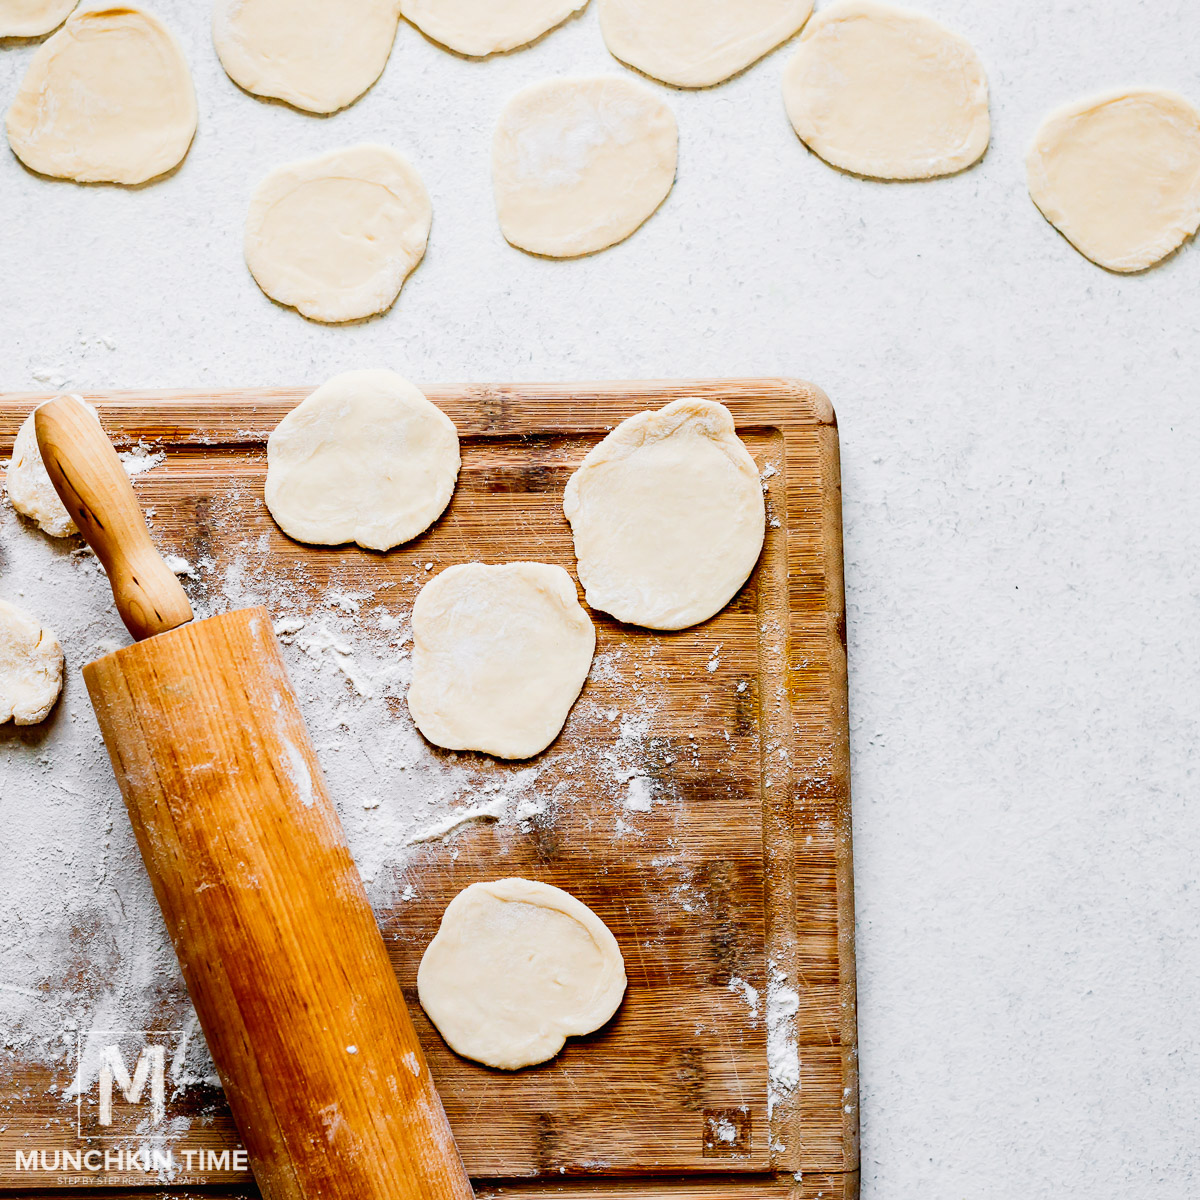 Dumplings dough rolled into circles.